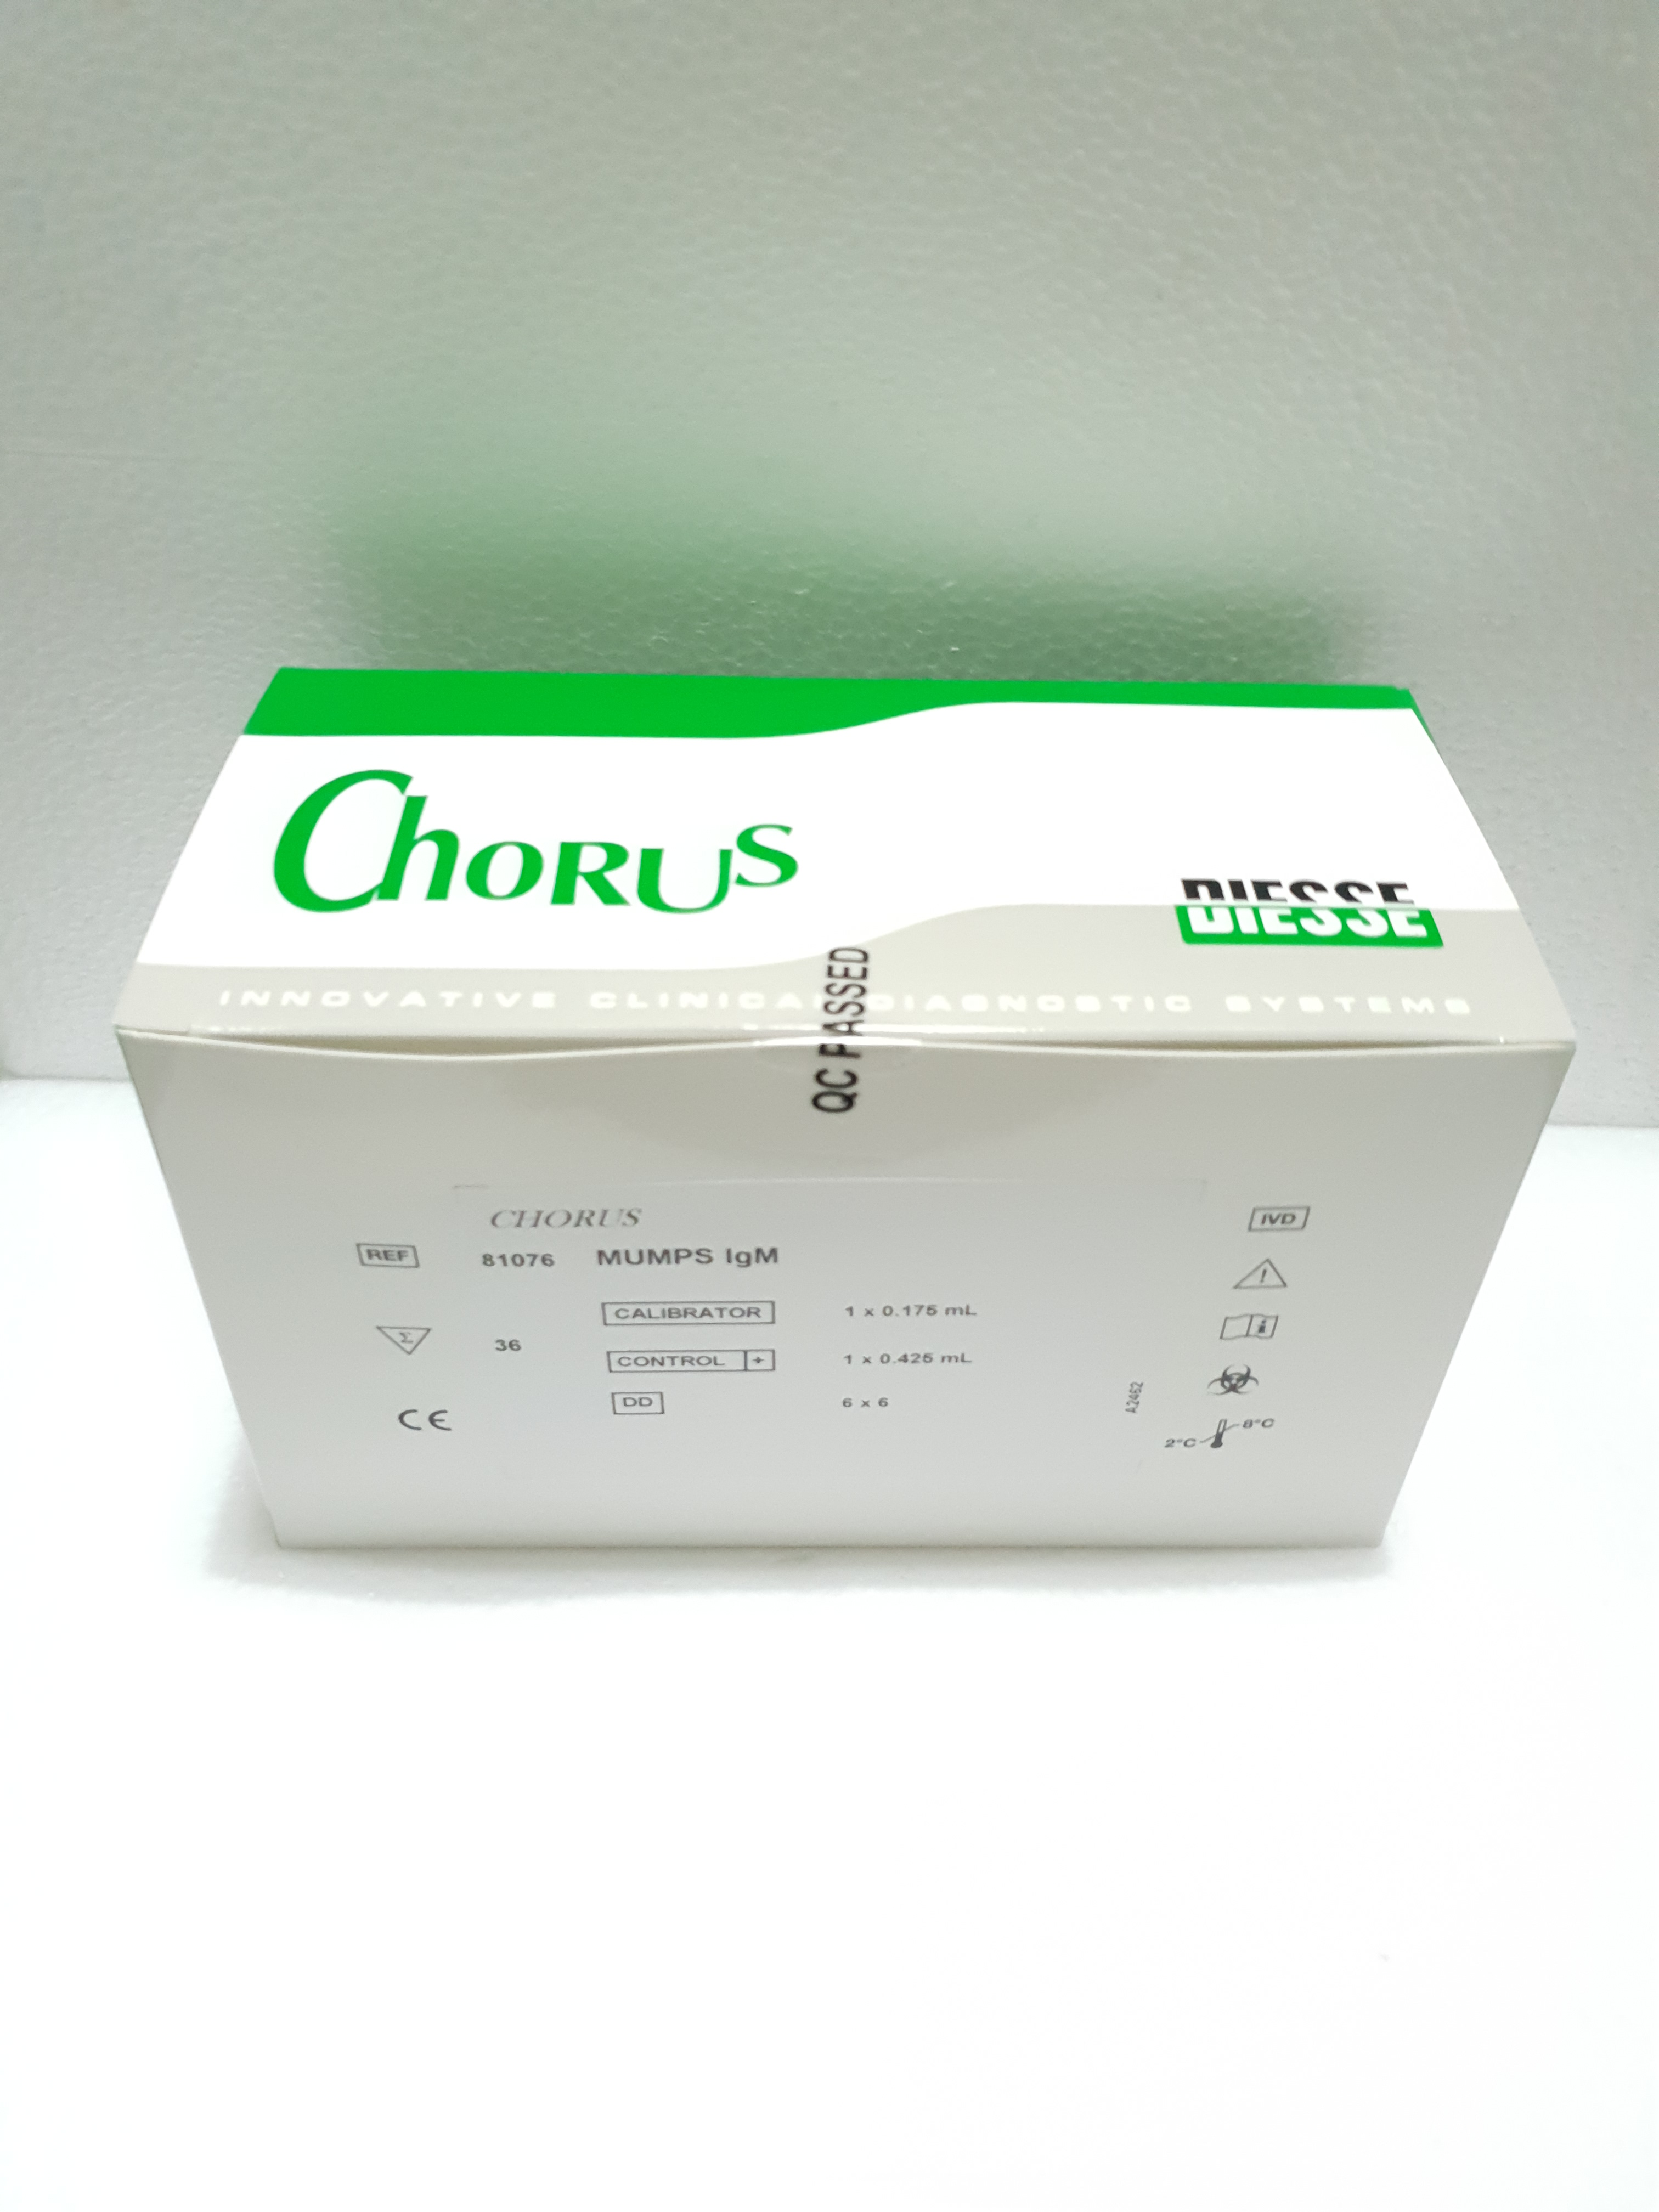 CHORUS Mumps IgM